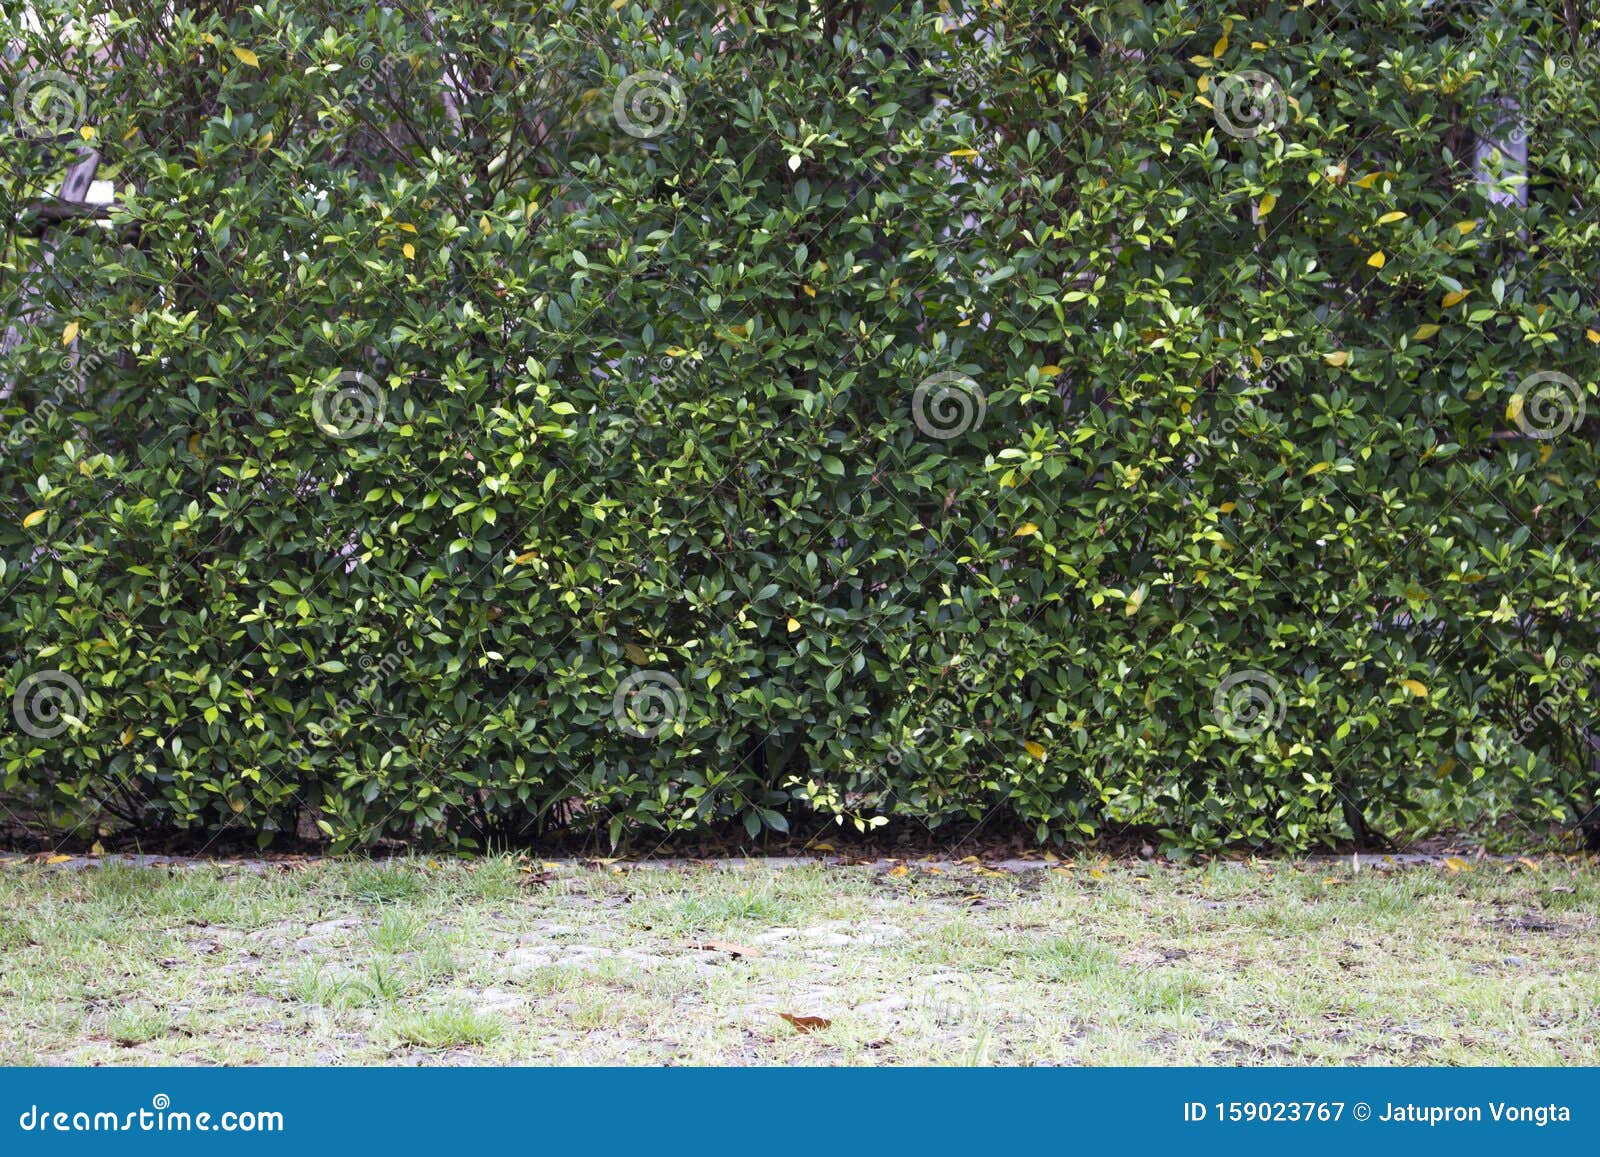 Green Bush Wall of Leaves in Garden Stock Image - Image of park, bush ...